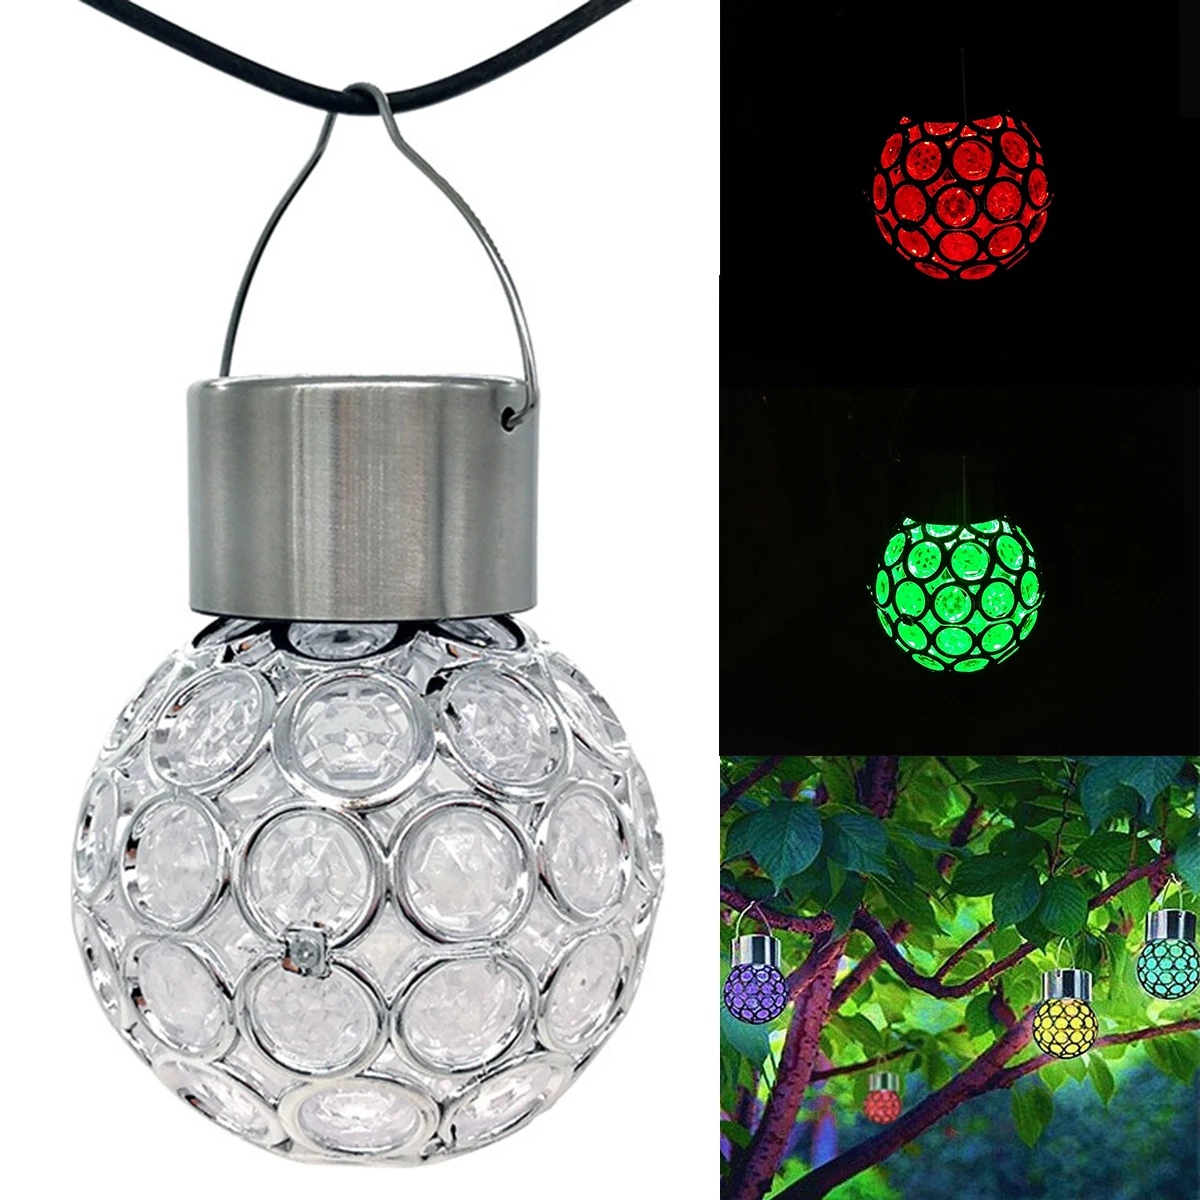 Solar Powered Crystal Ball Light Outdoor Garden LED Hanging Christmas Festival Outside Decor | Лампы и освещение